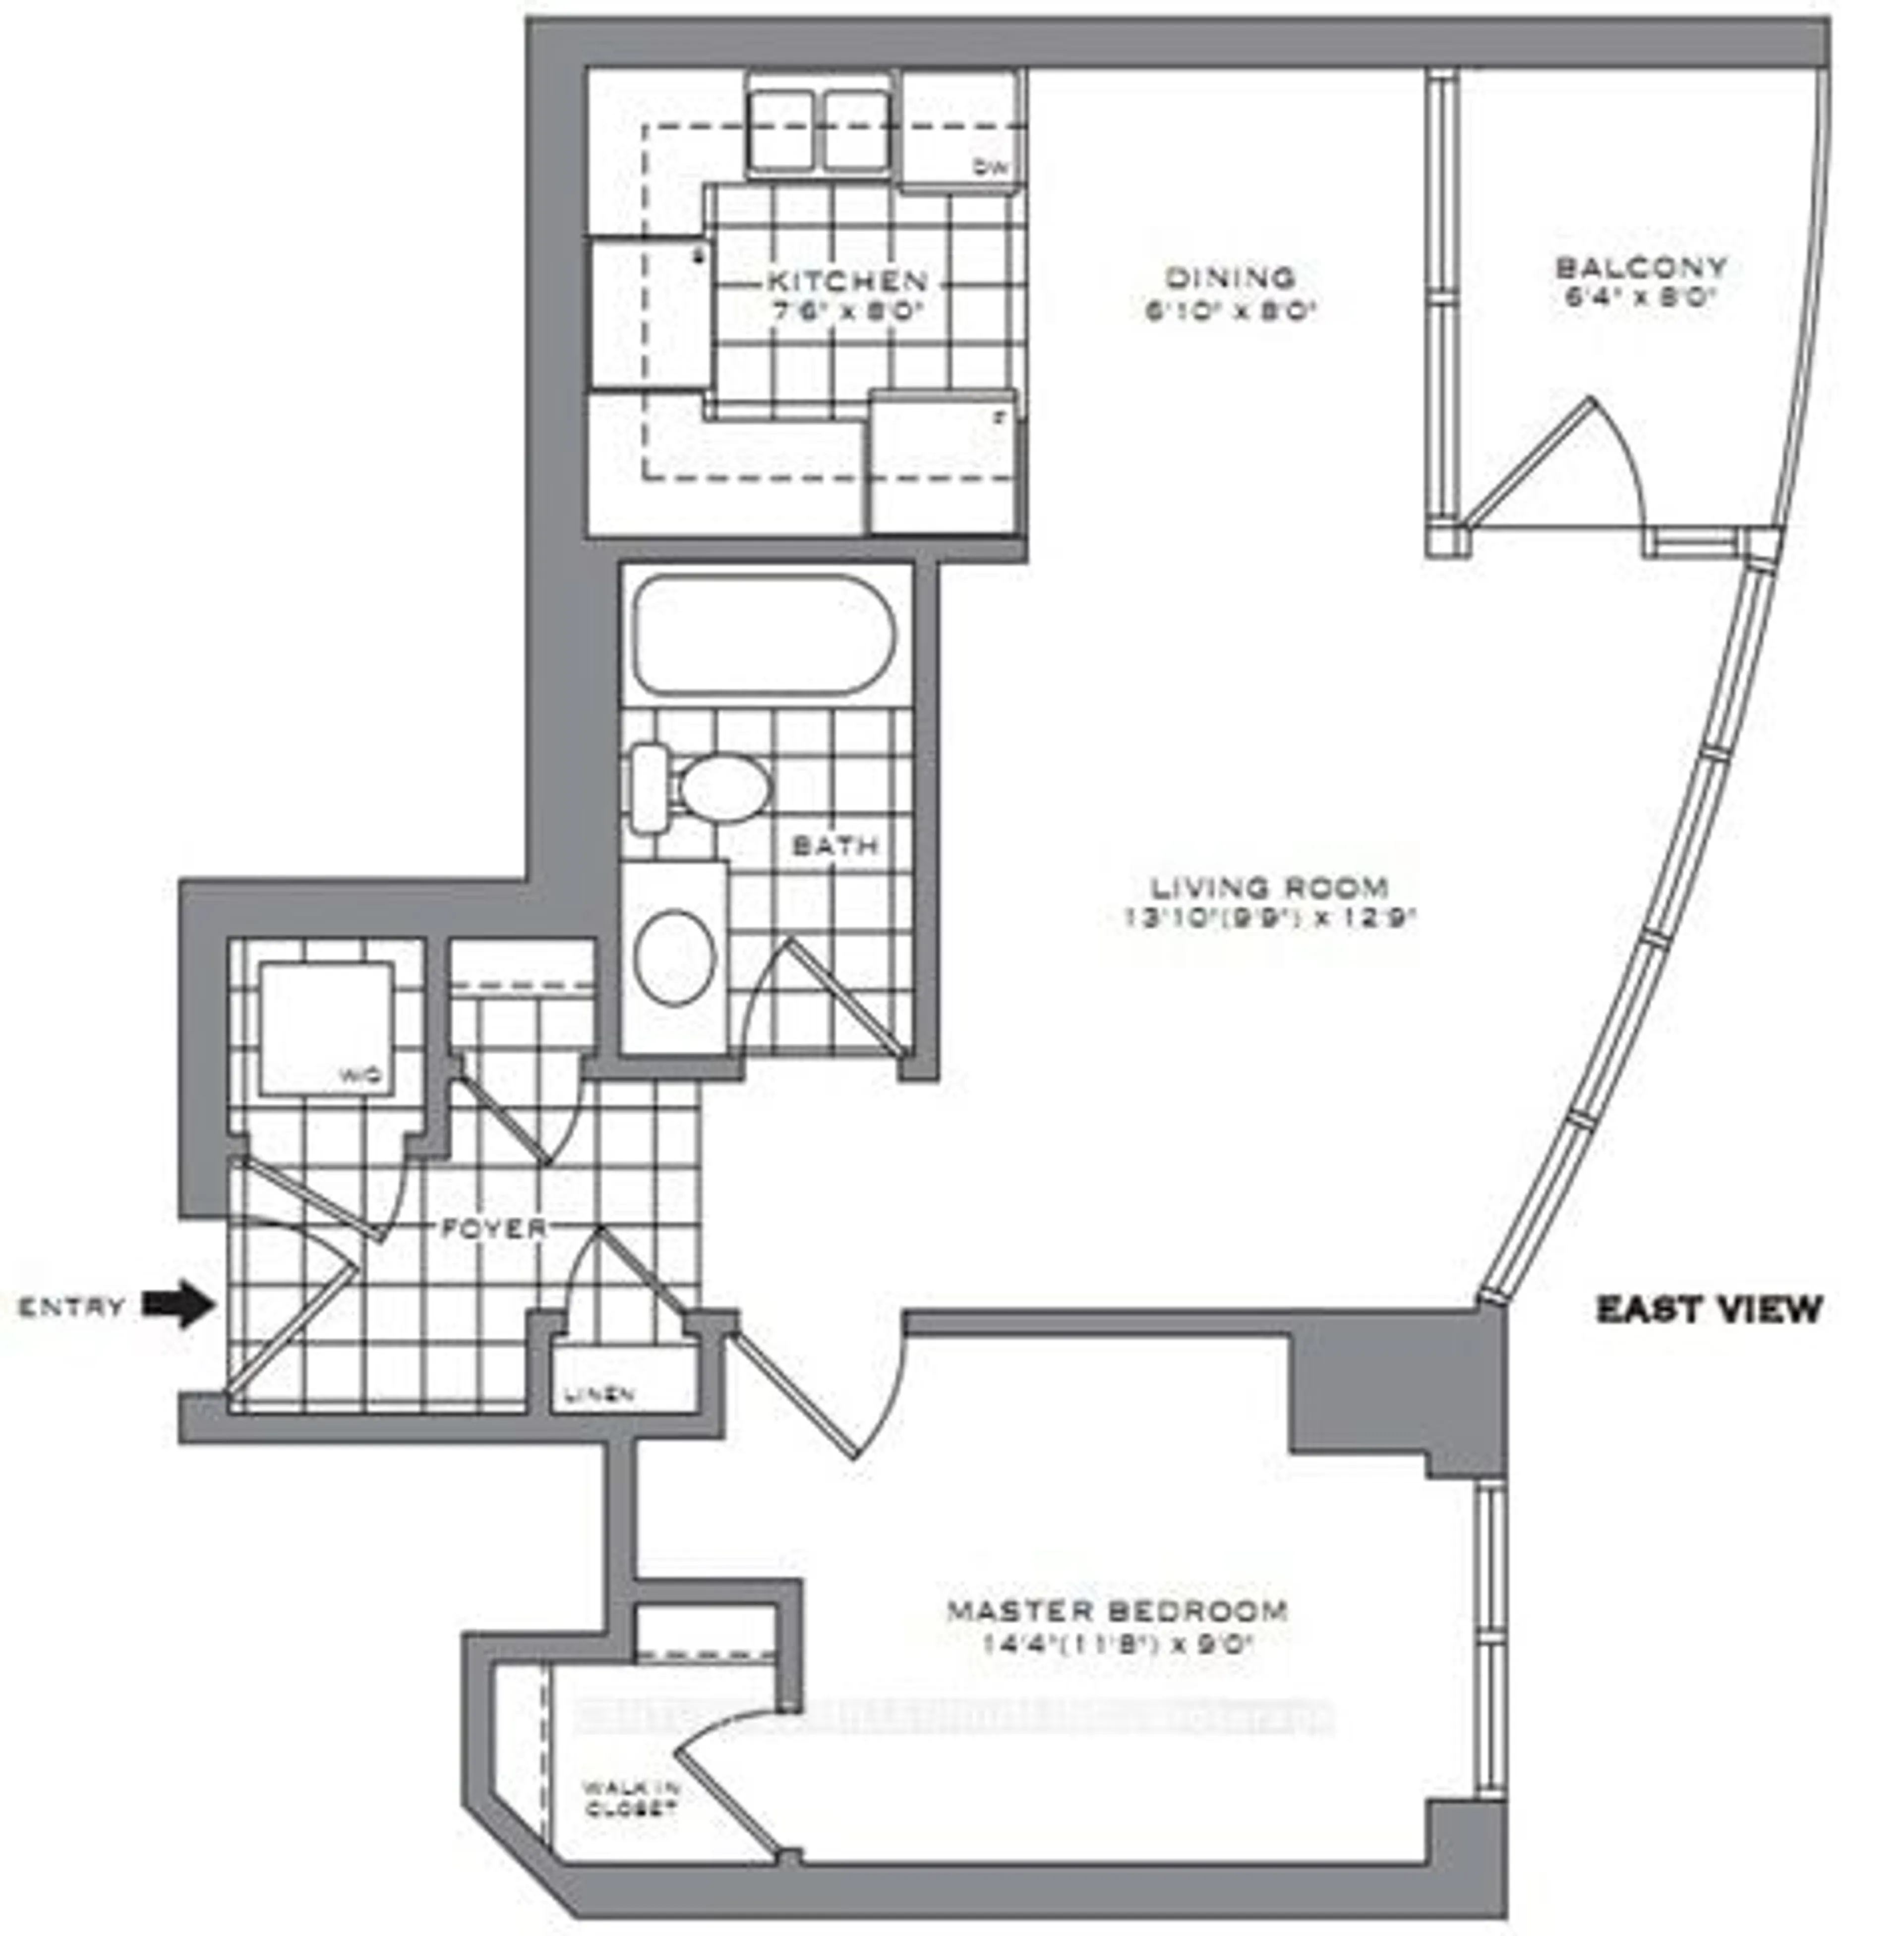 Floor plan for 9 George St #2504, Brampton Ontario M5V 4A5